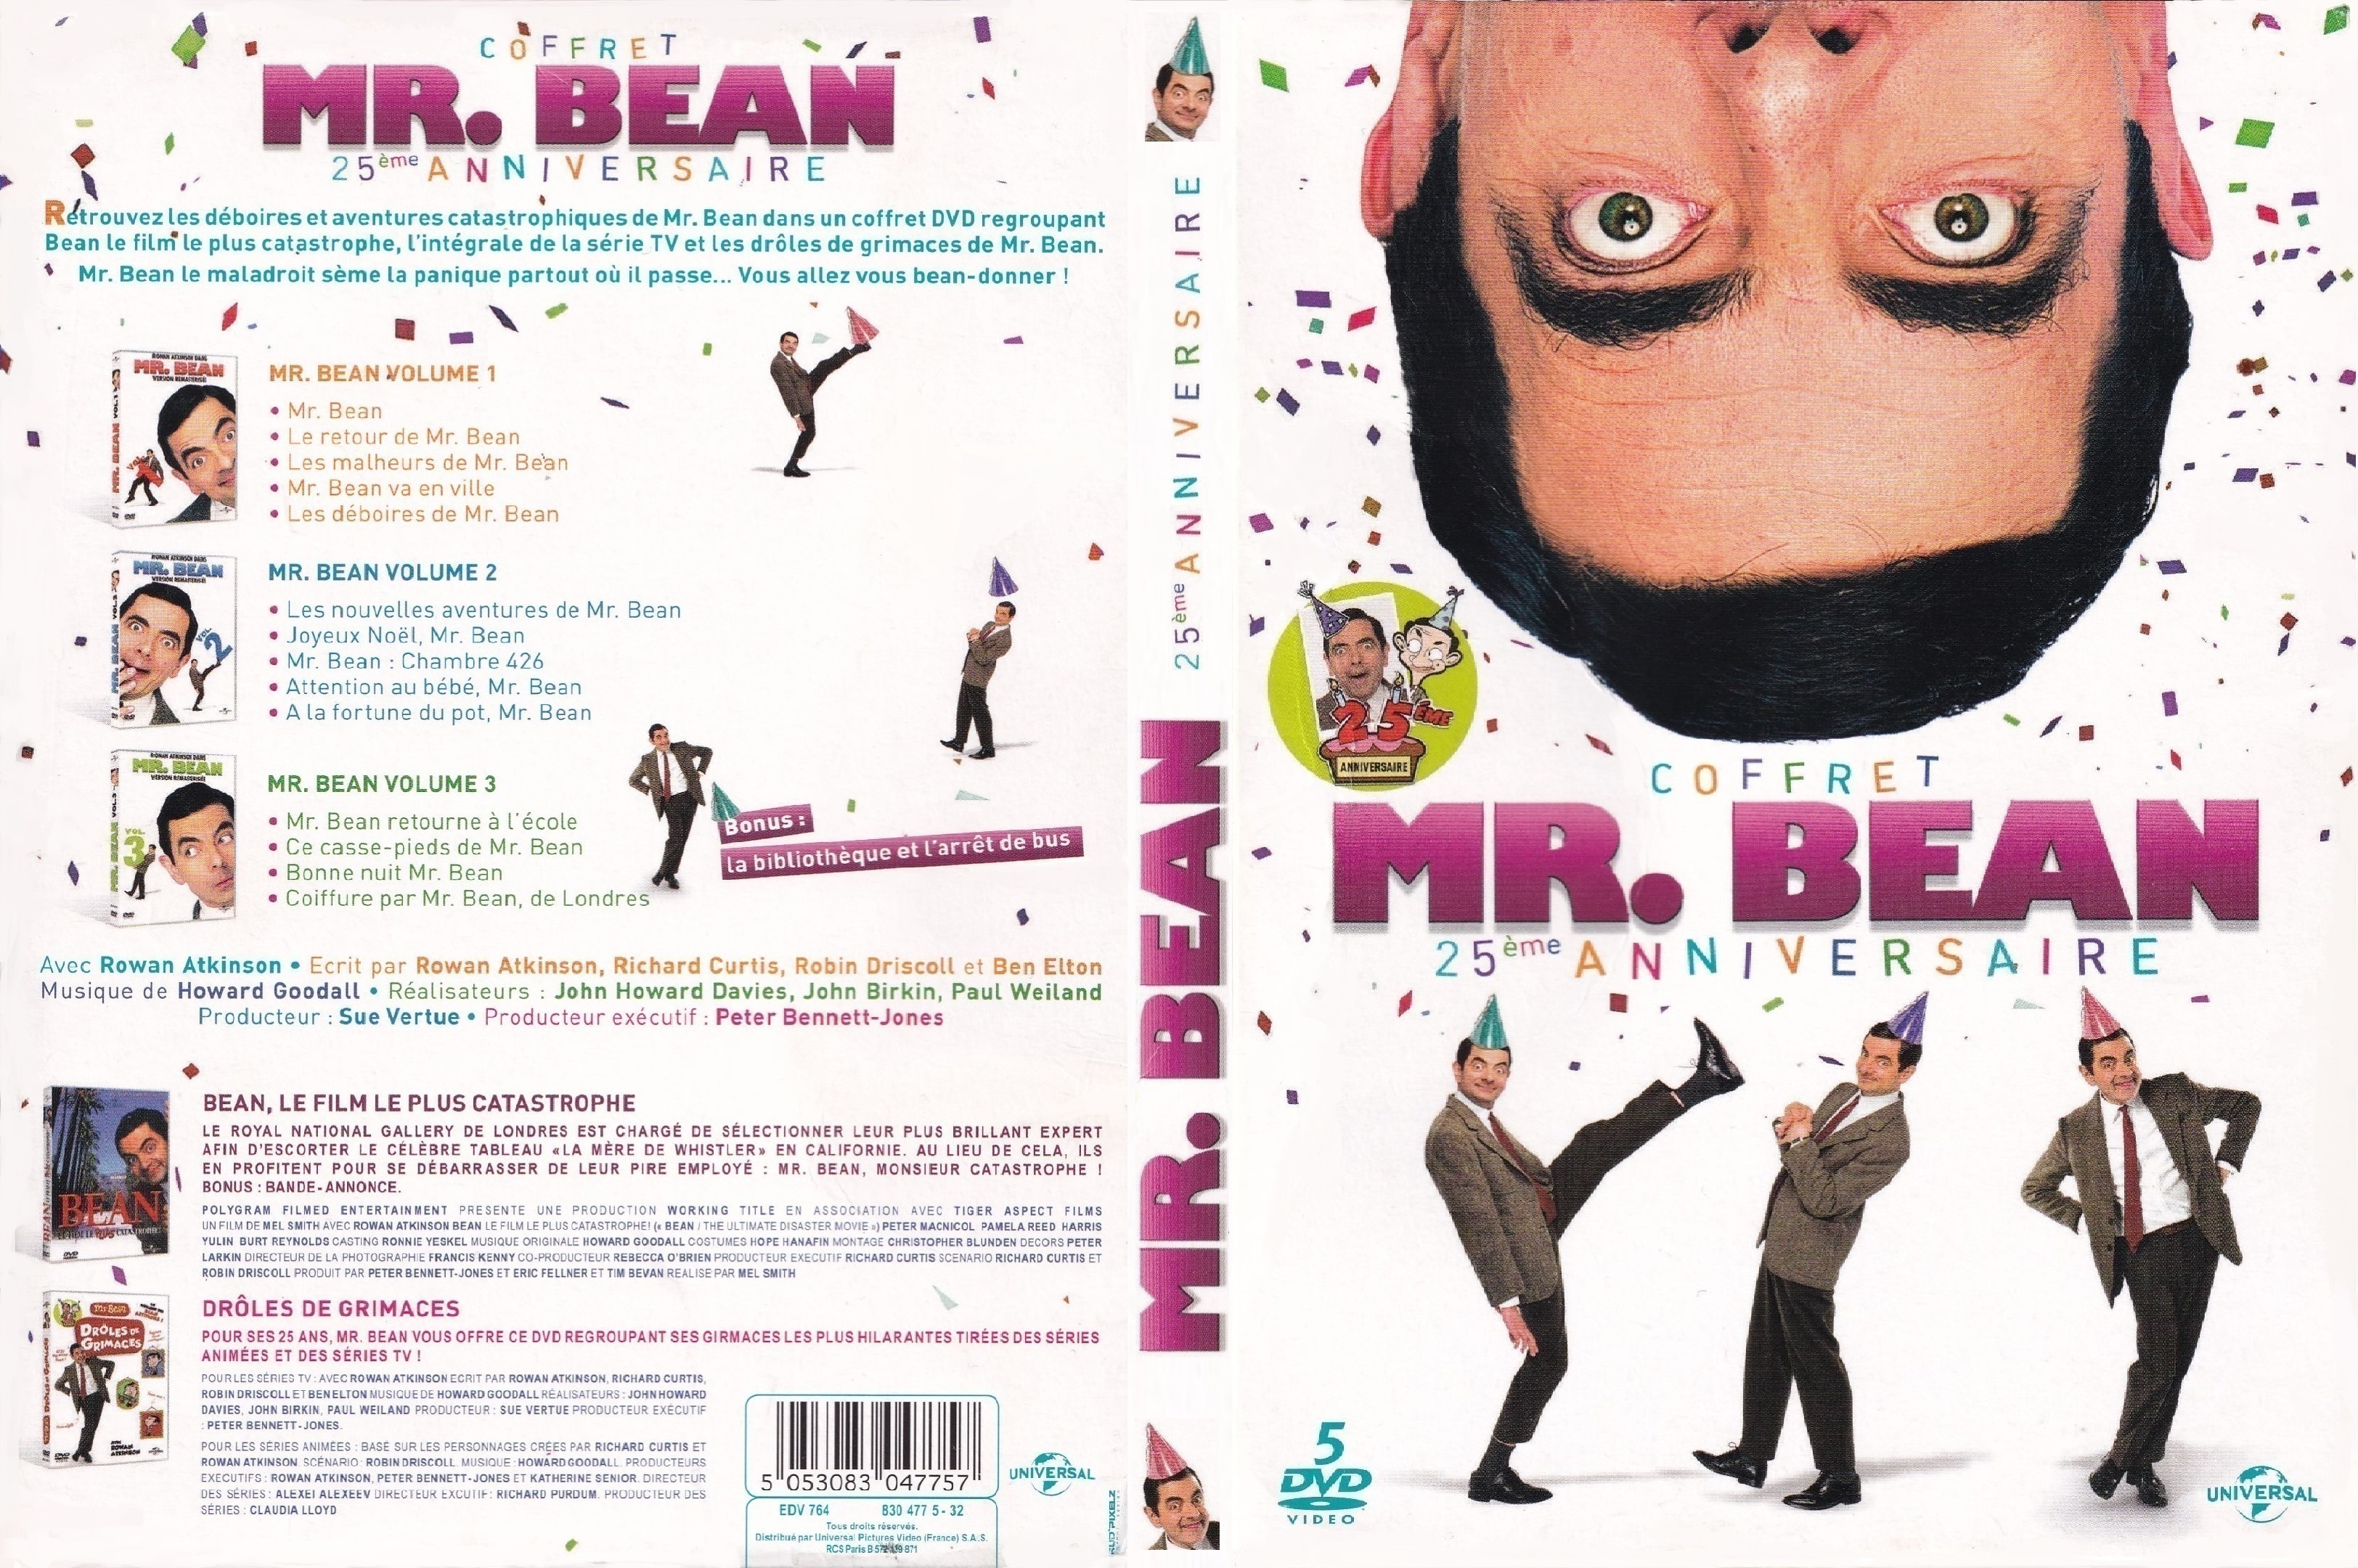 Jaquette DVD Mr Bean - Coffret 25e Anniversaire